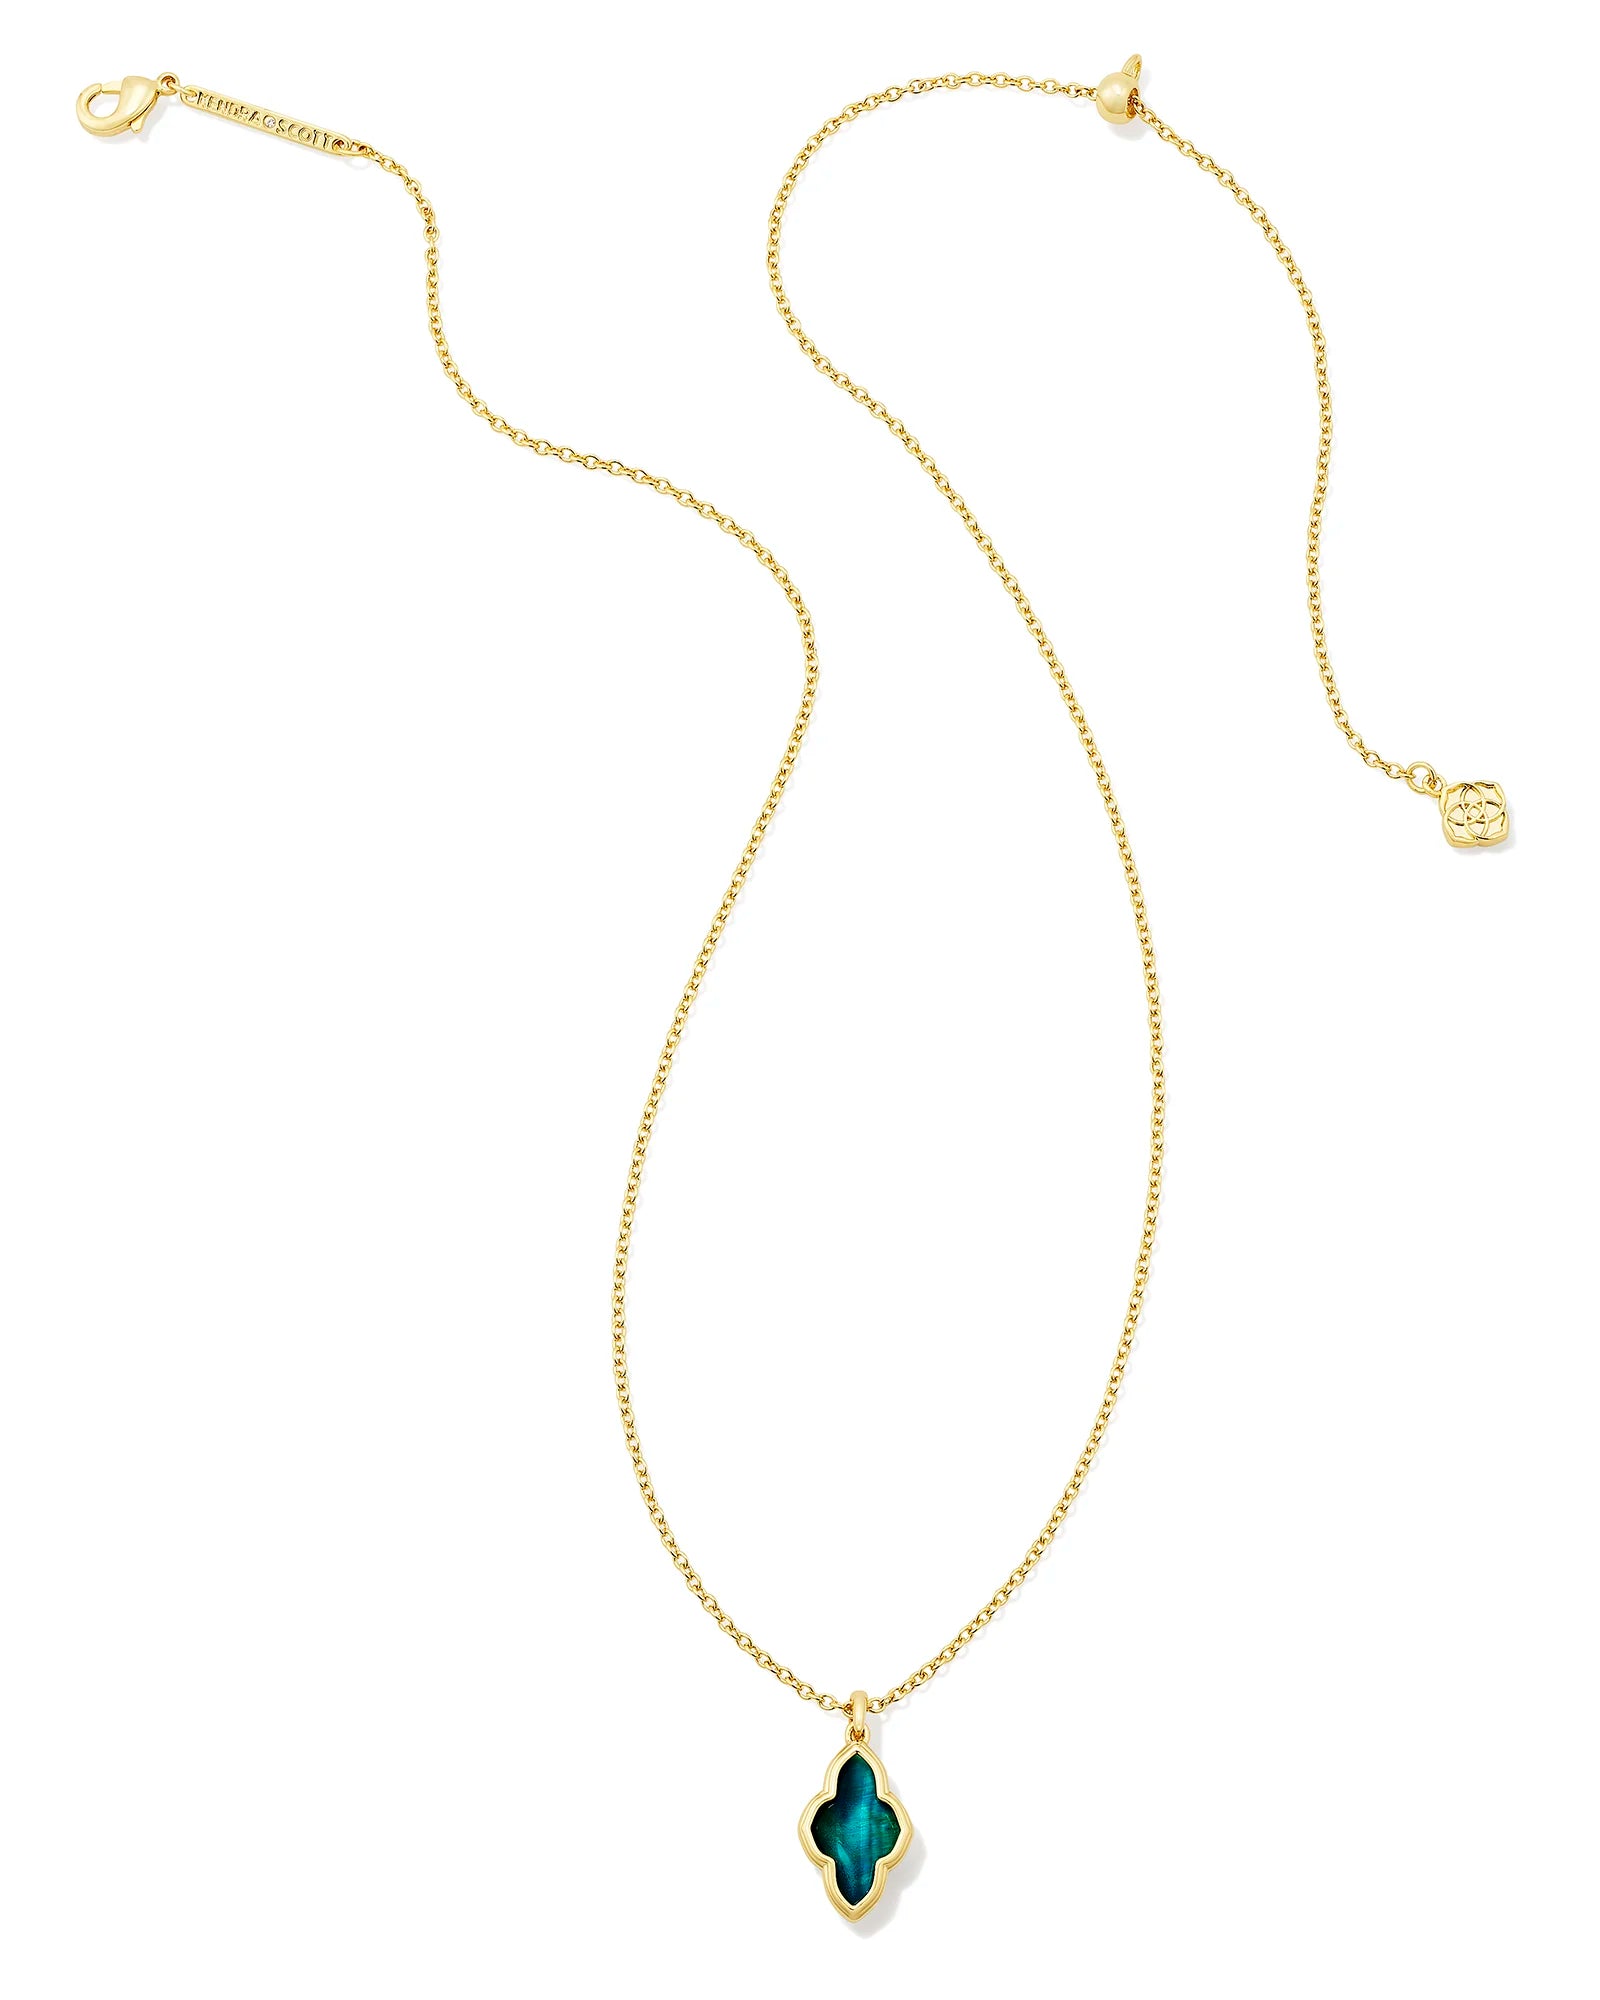 Kendra Scott | Framed Abbie Gold Short Pendant Necklace in Teal Tiger's Eye - Giddy Up Glamour Boutique